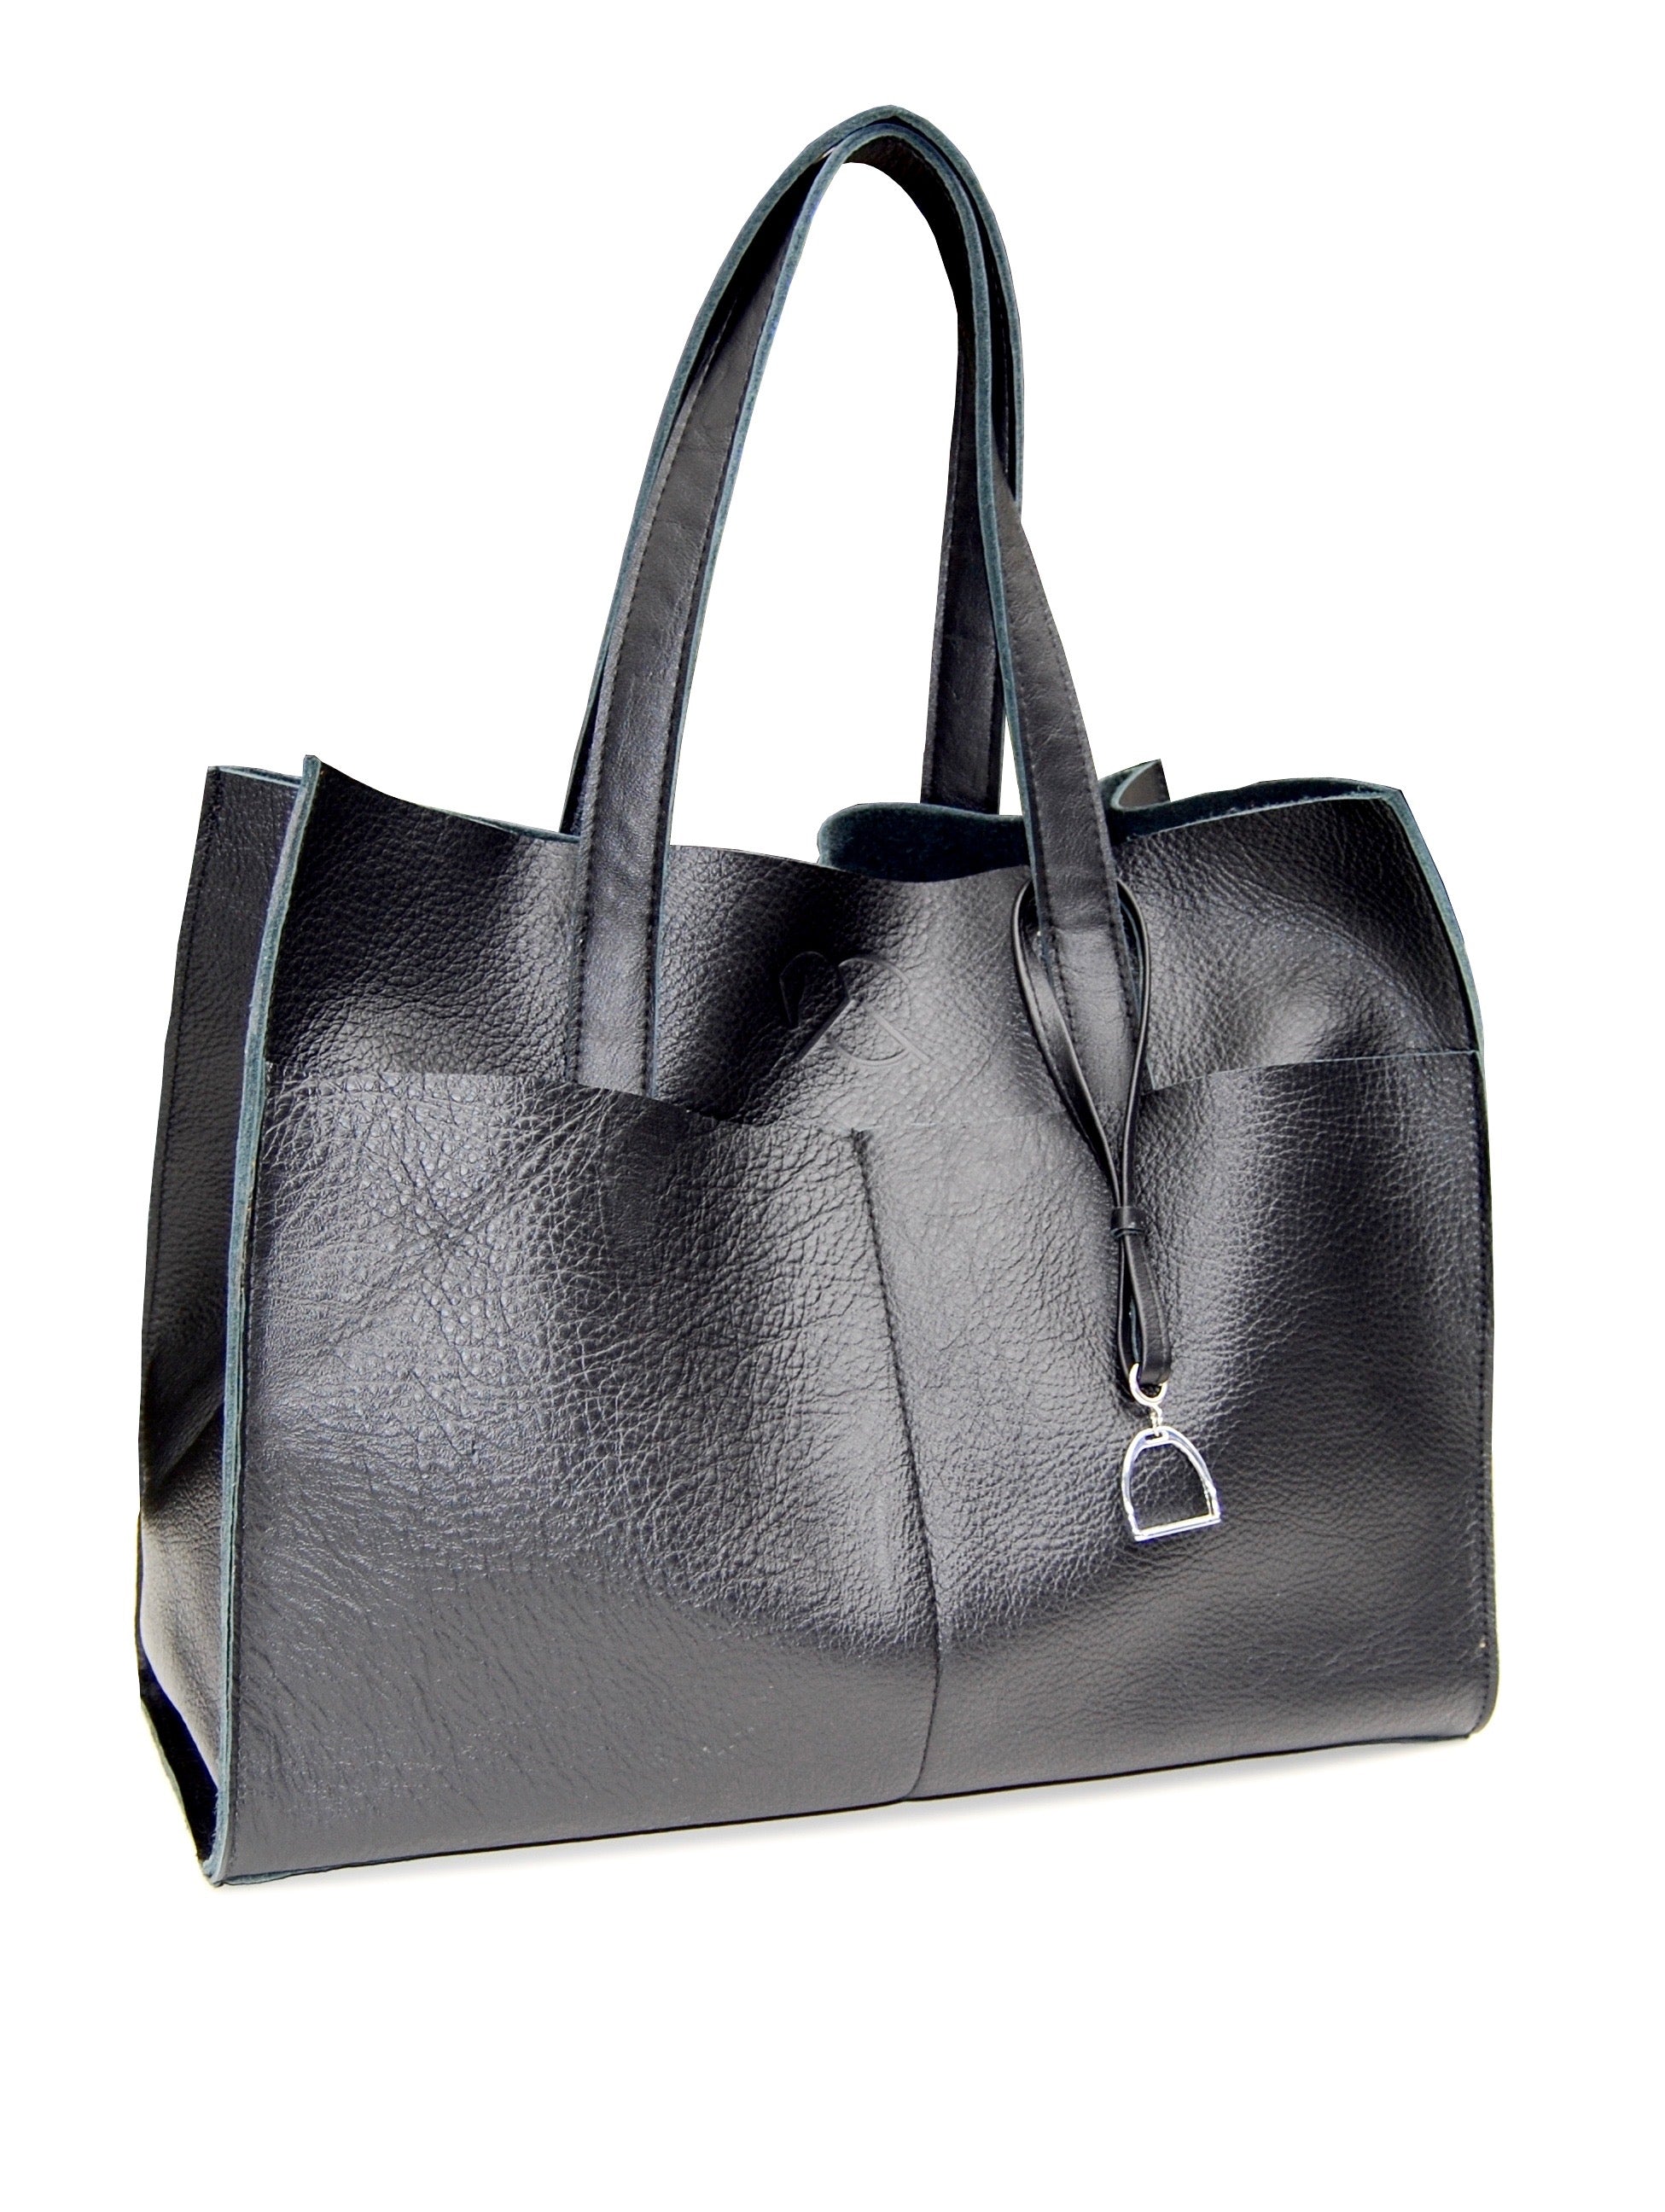 MARWARI TOTE in black | Equestrian Handbags | Leather Tote Bags - AtelierCG™